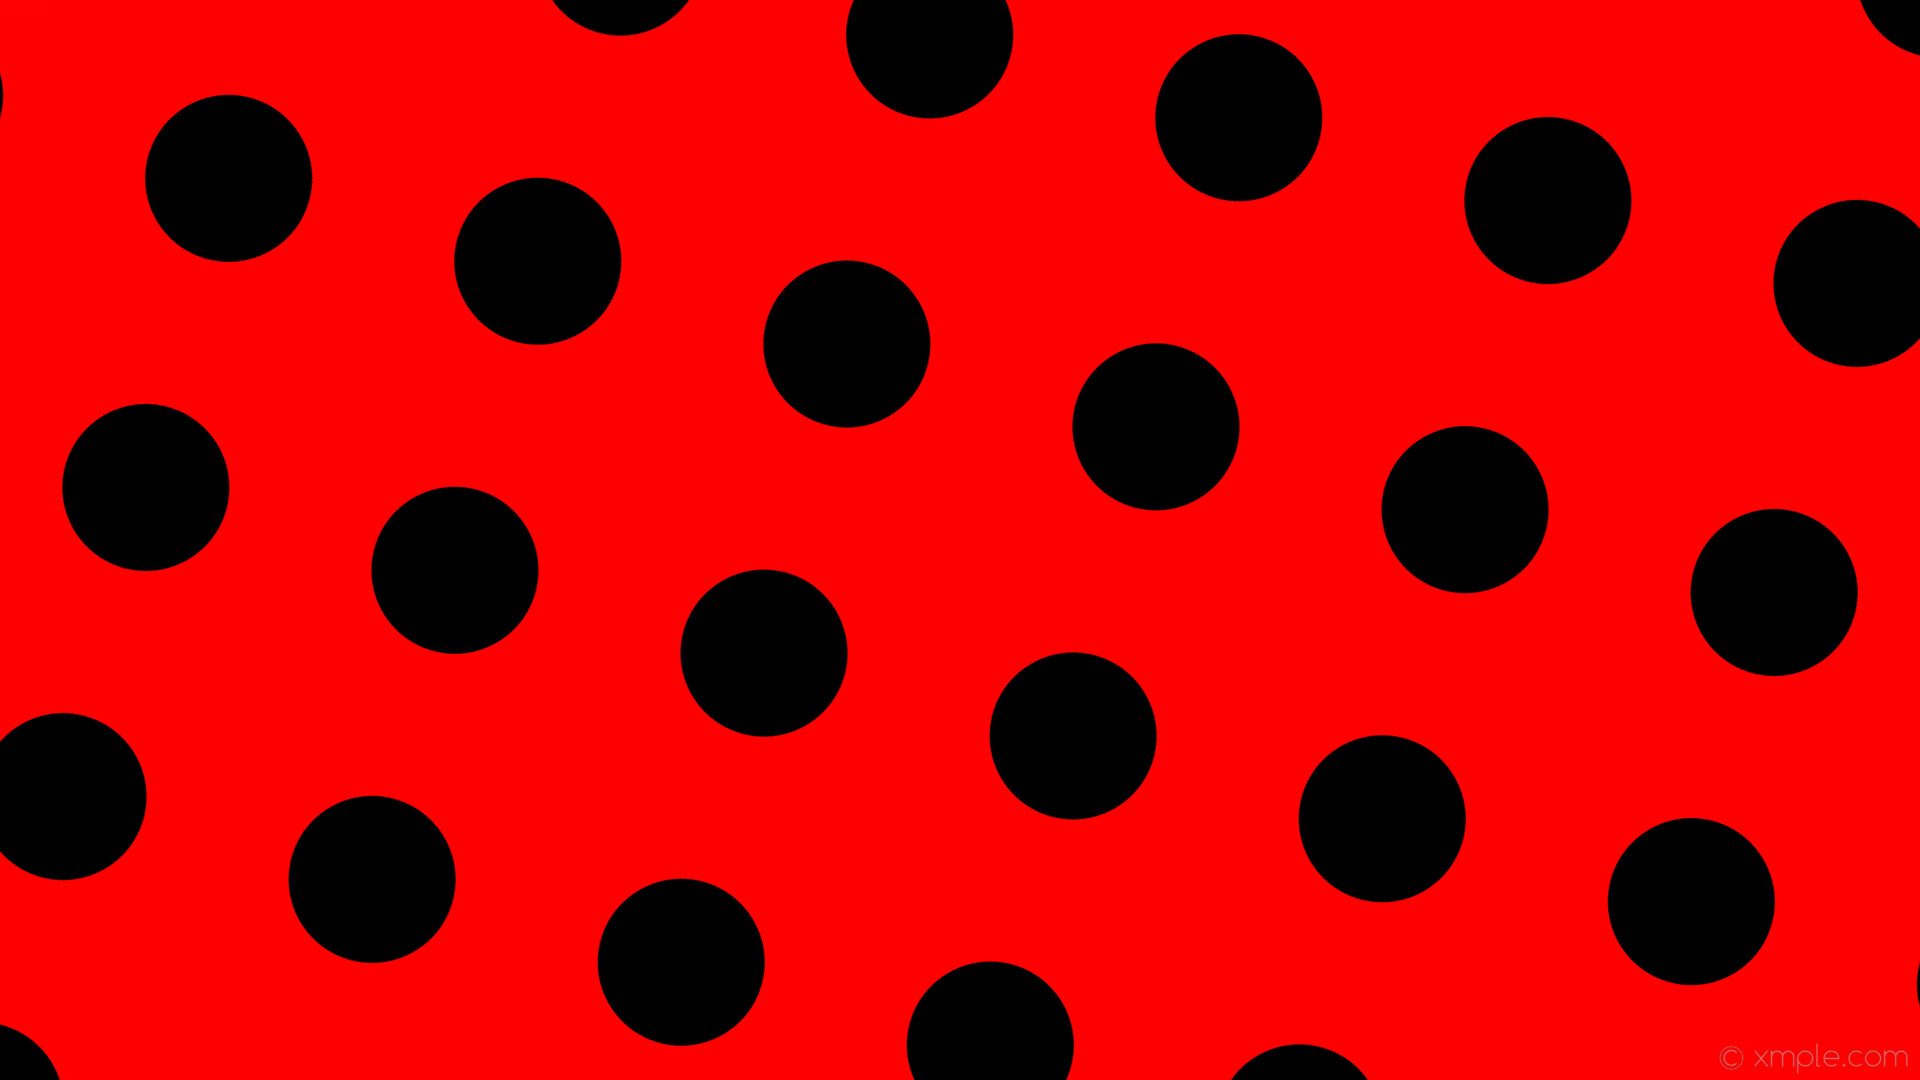 1920x1080 wallpaper dots red polka black spots #ff0000 #000000 255Â° 167px 320px